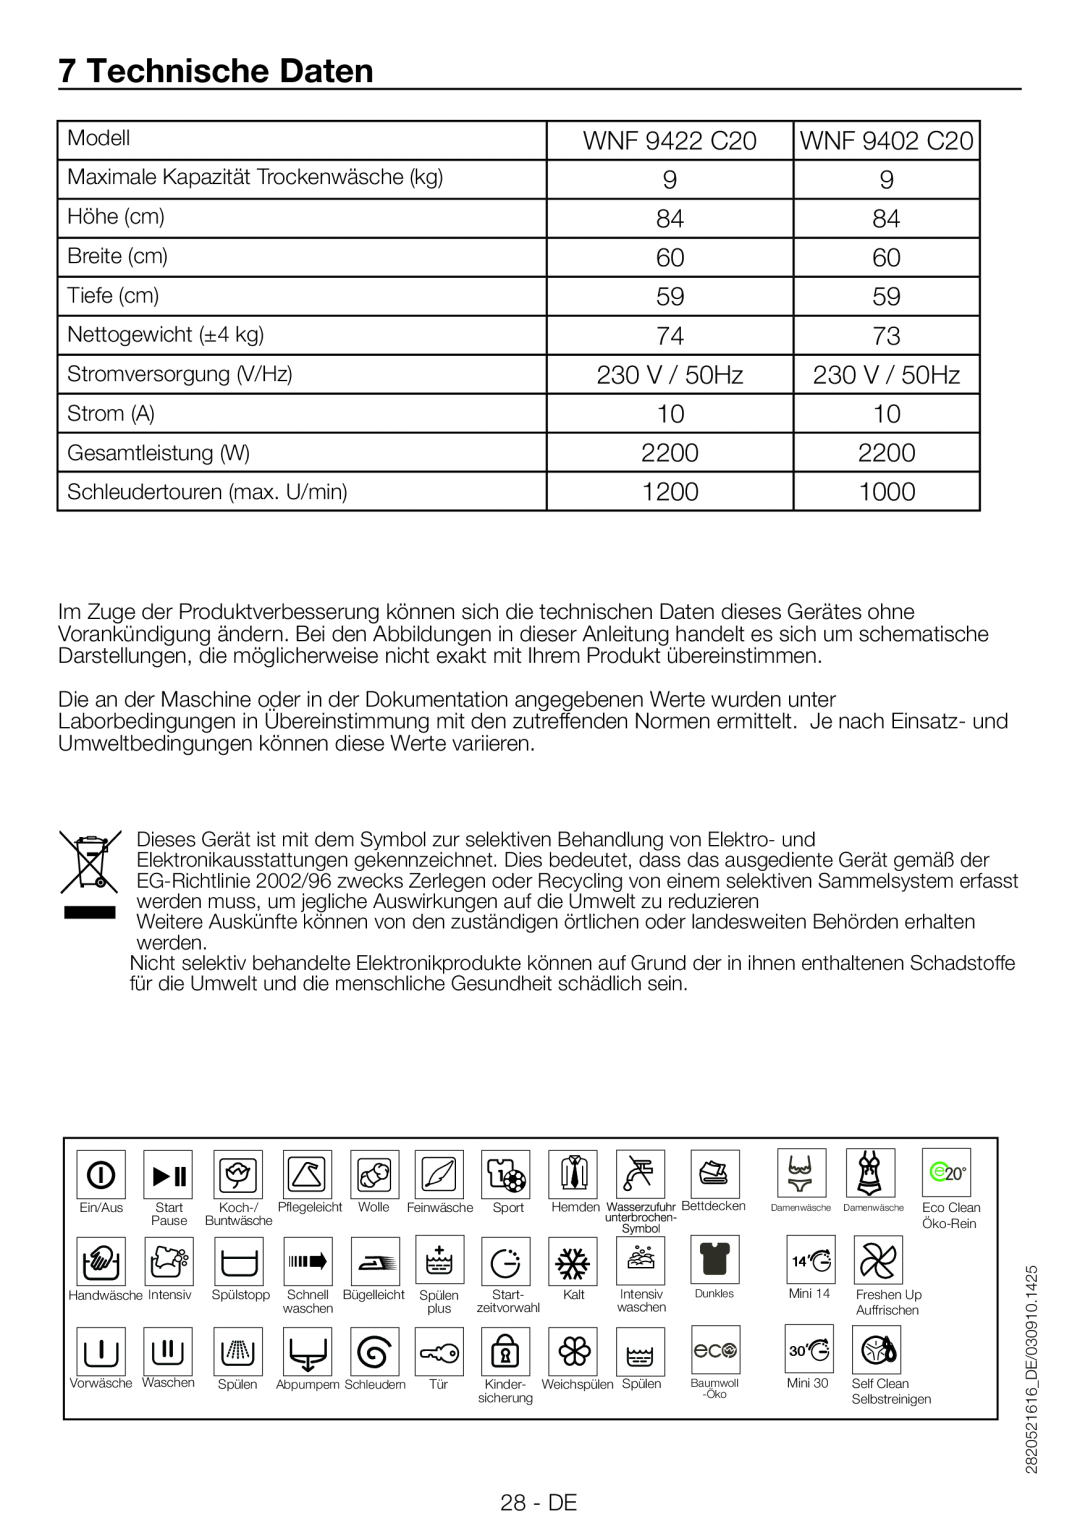 Blomberg WNF 9402 C20 user manual Technische Daten, WNF 9422 C20, 230 V / 50Hz, 2200, 1200, 1000 